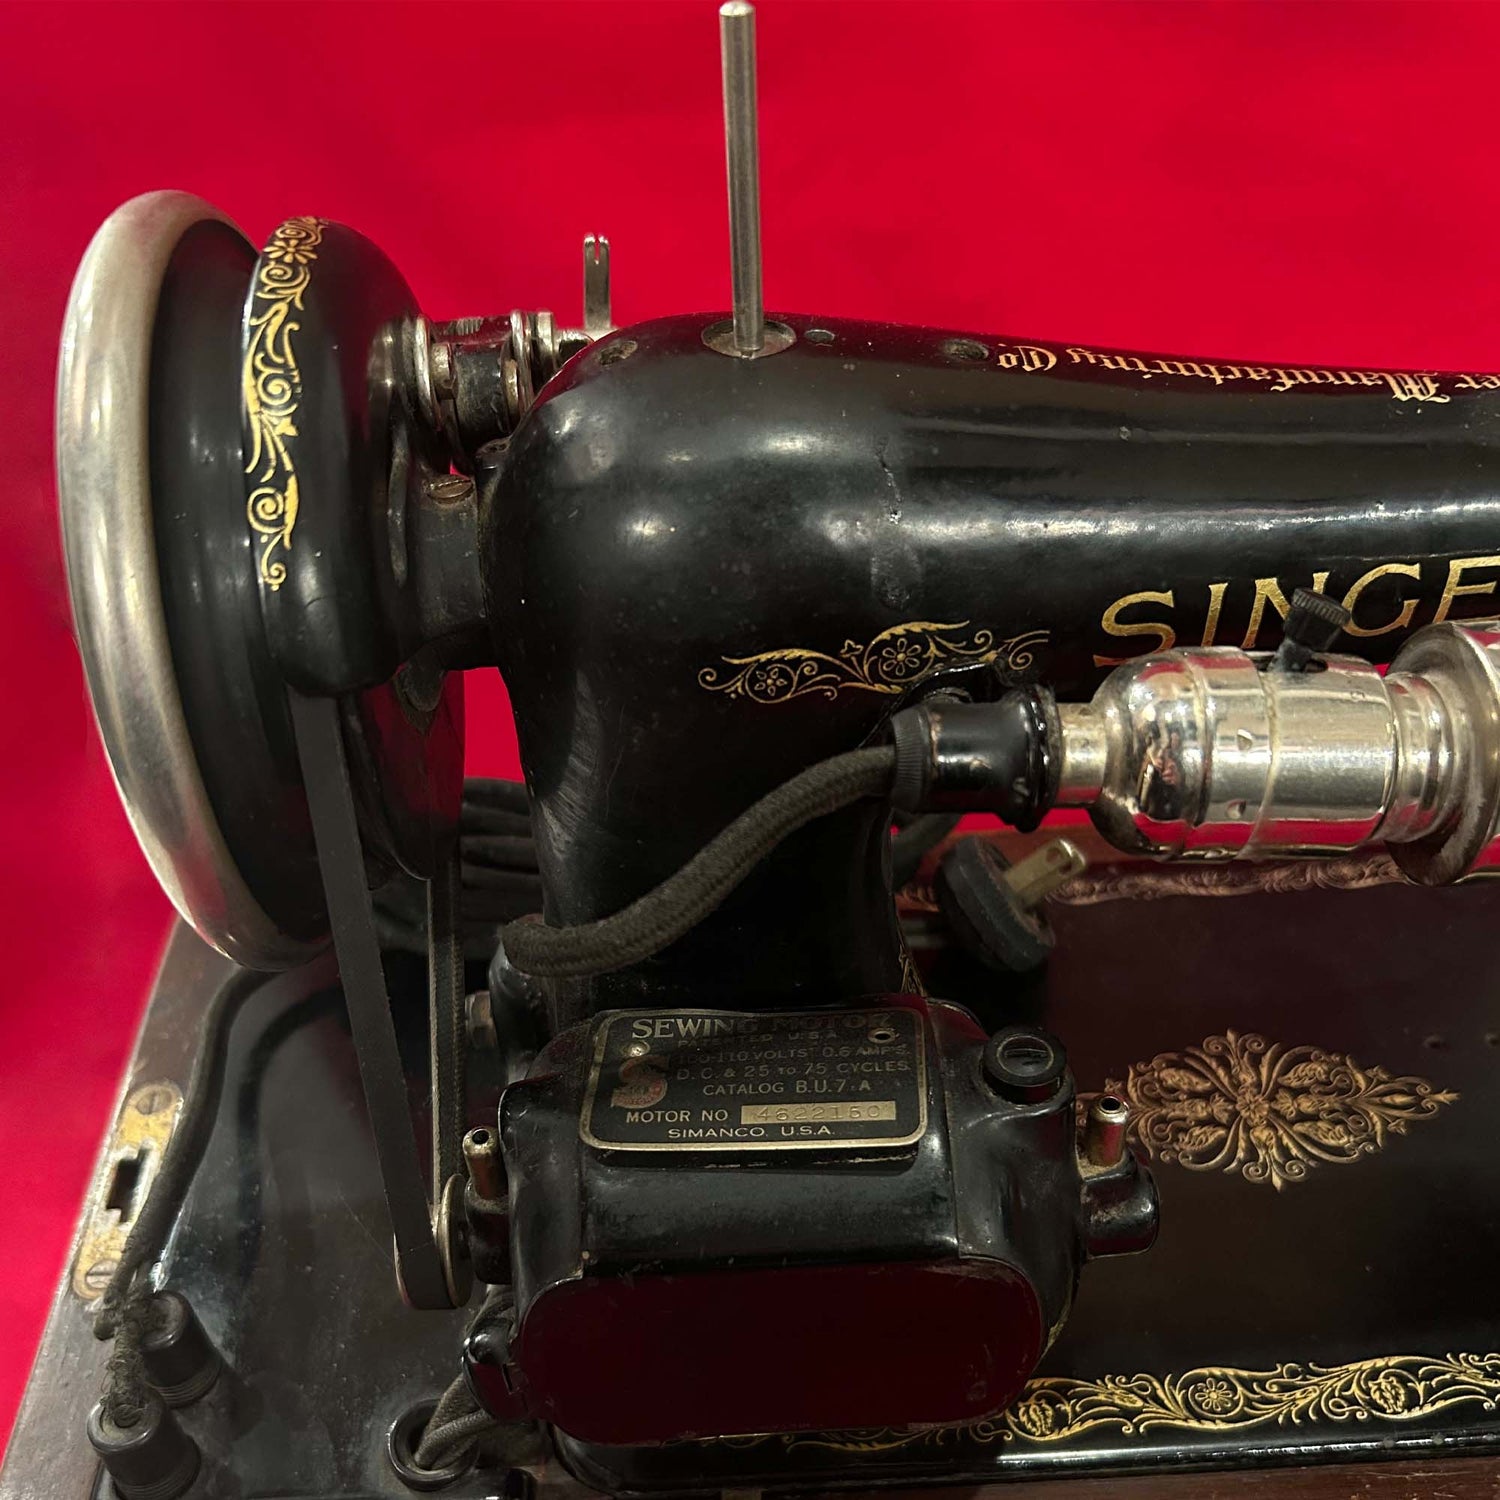 Vintage Singer Sewing Machine Close Up